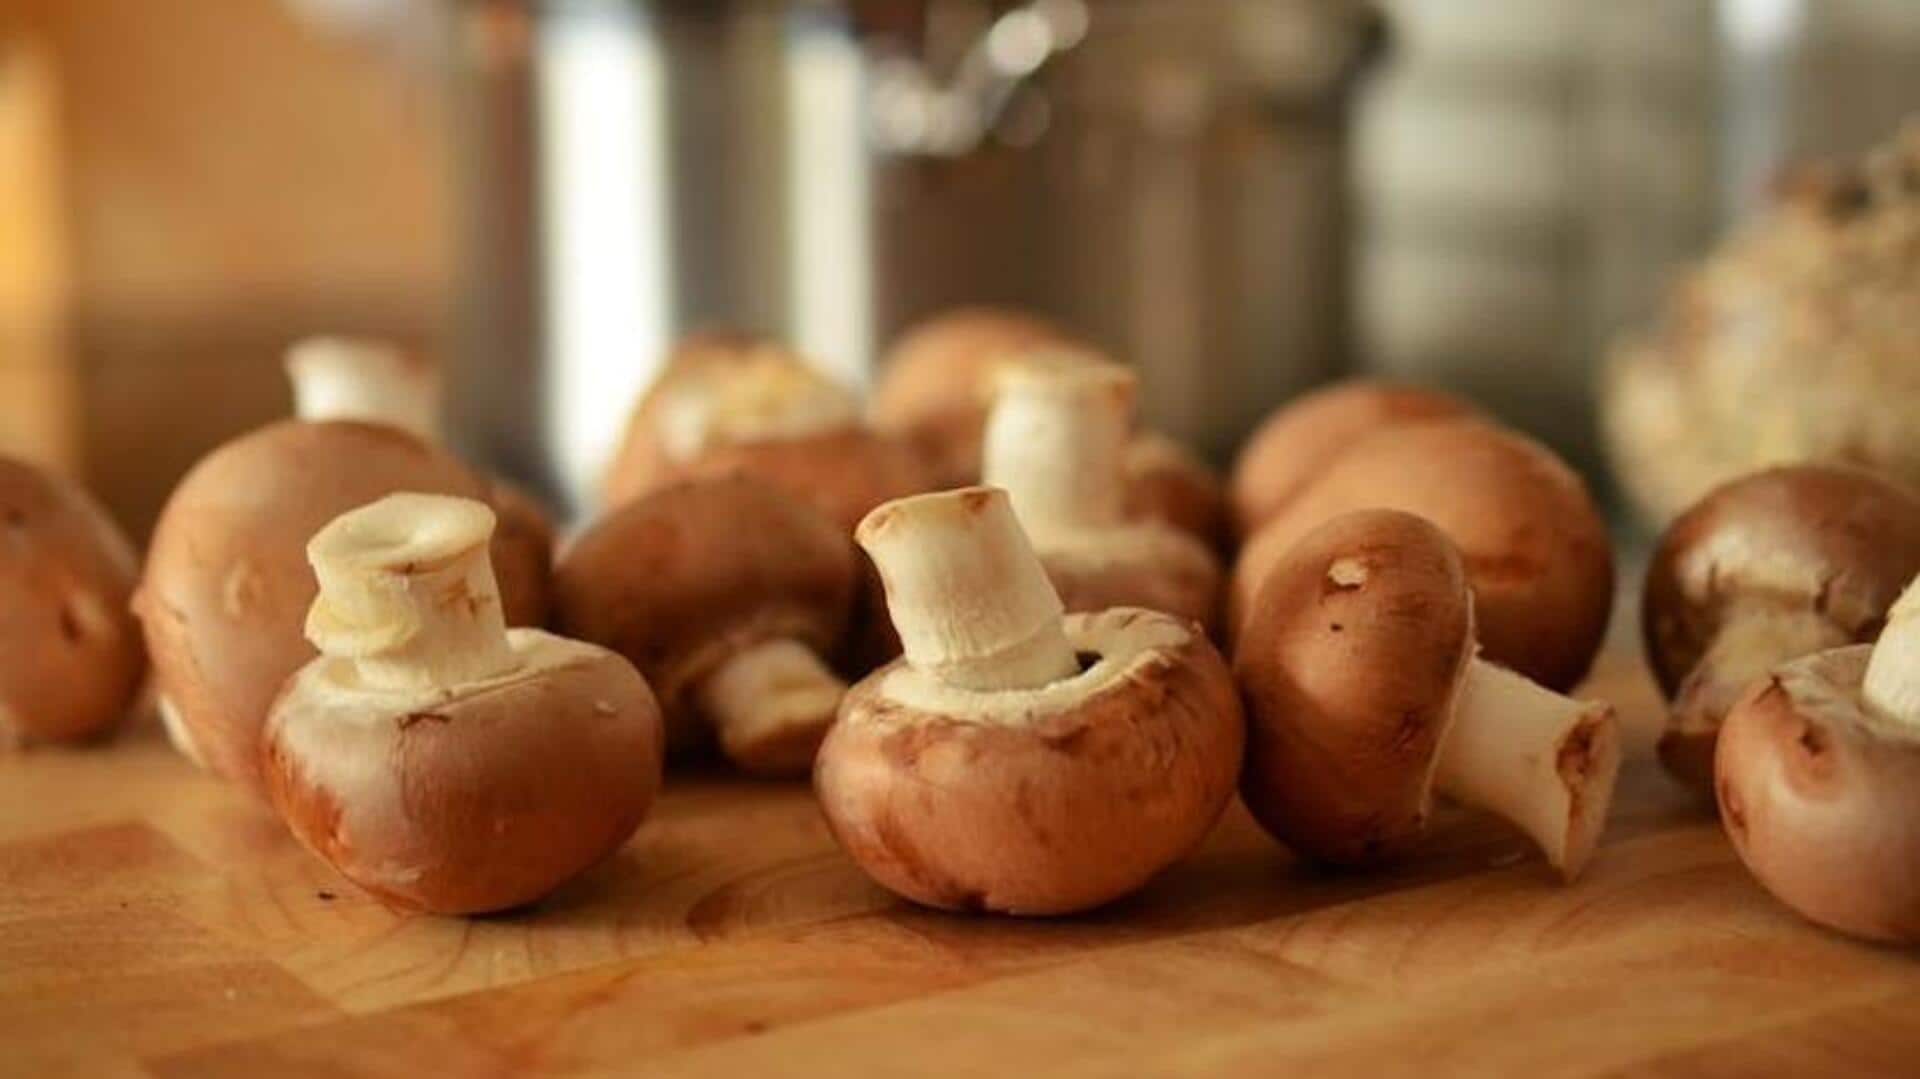 Mushroom-based dishes for those on a vegan keto diet